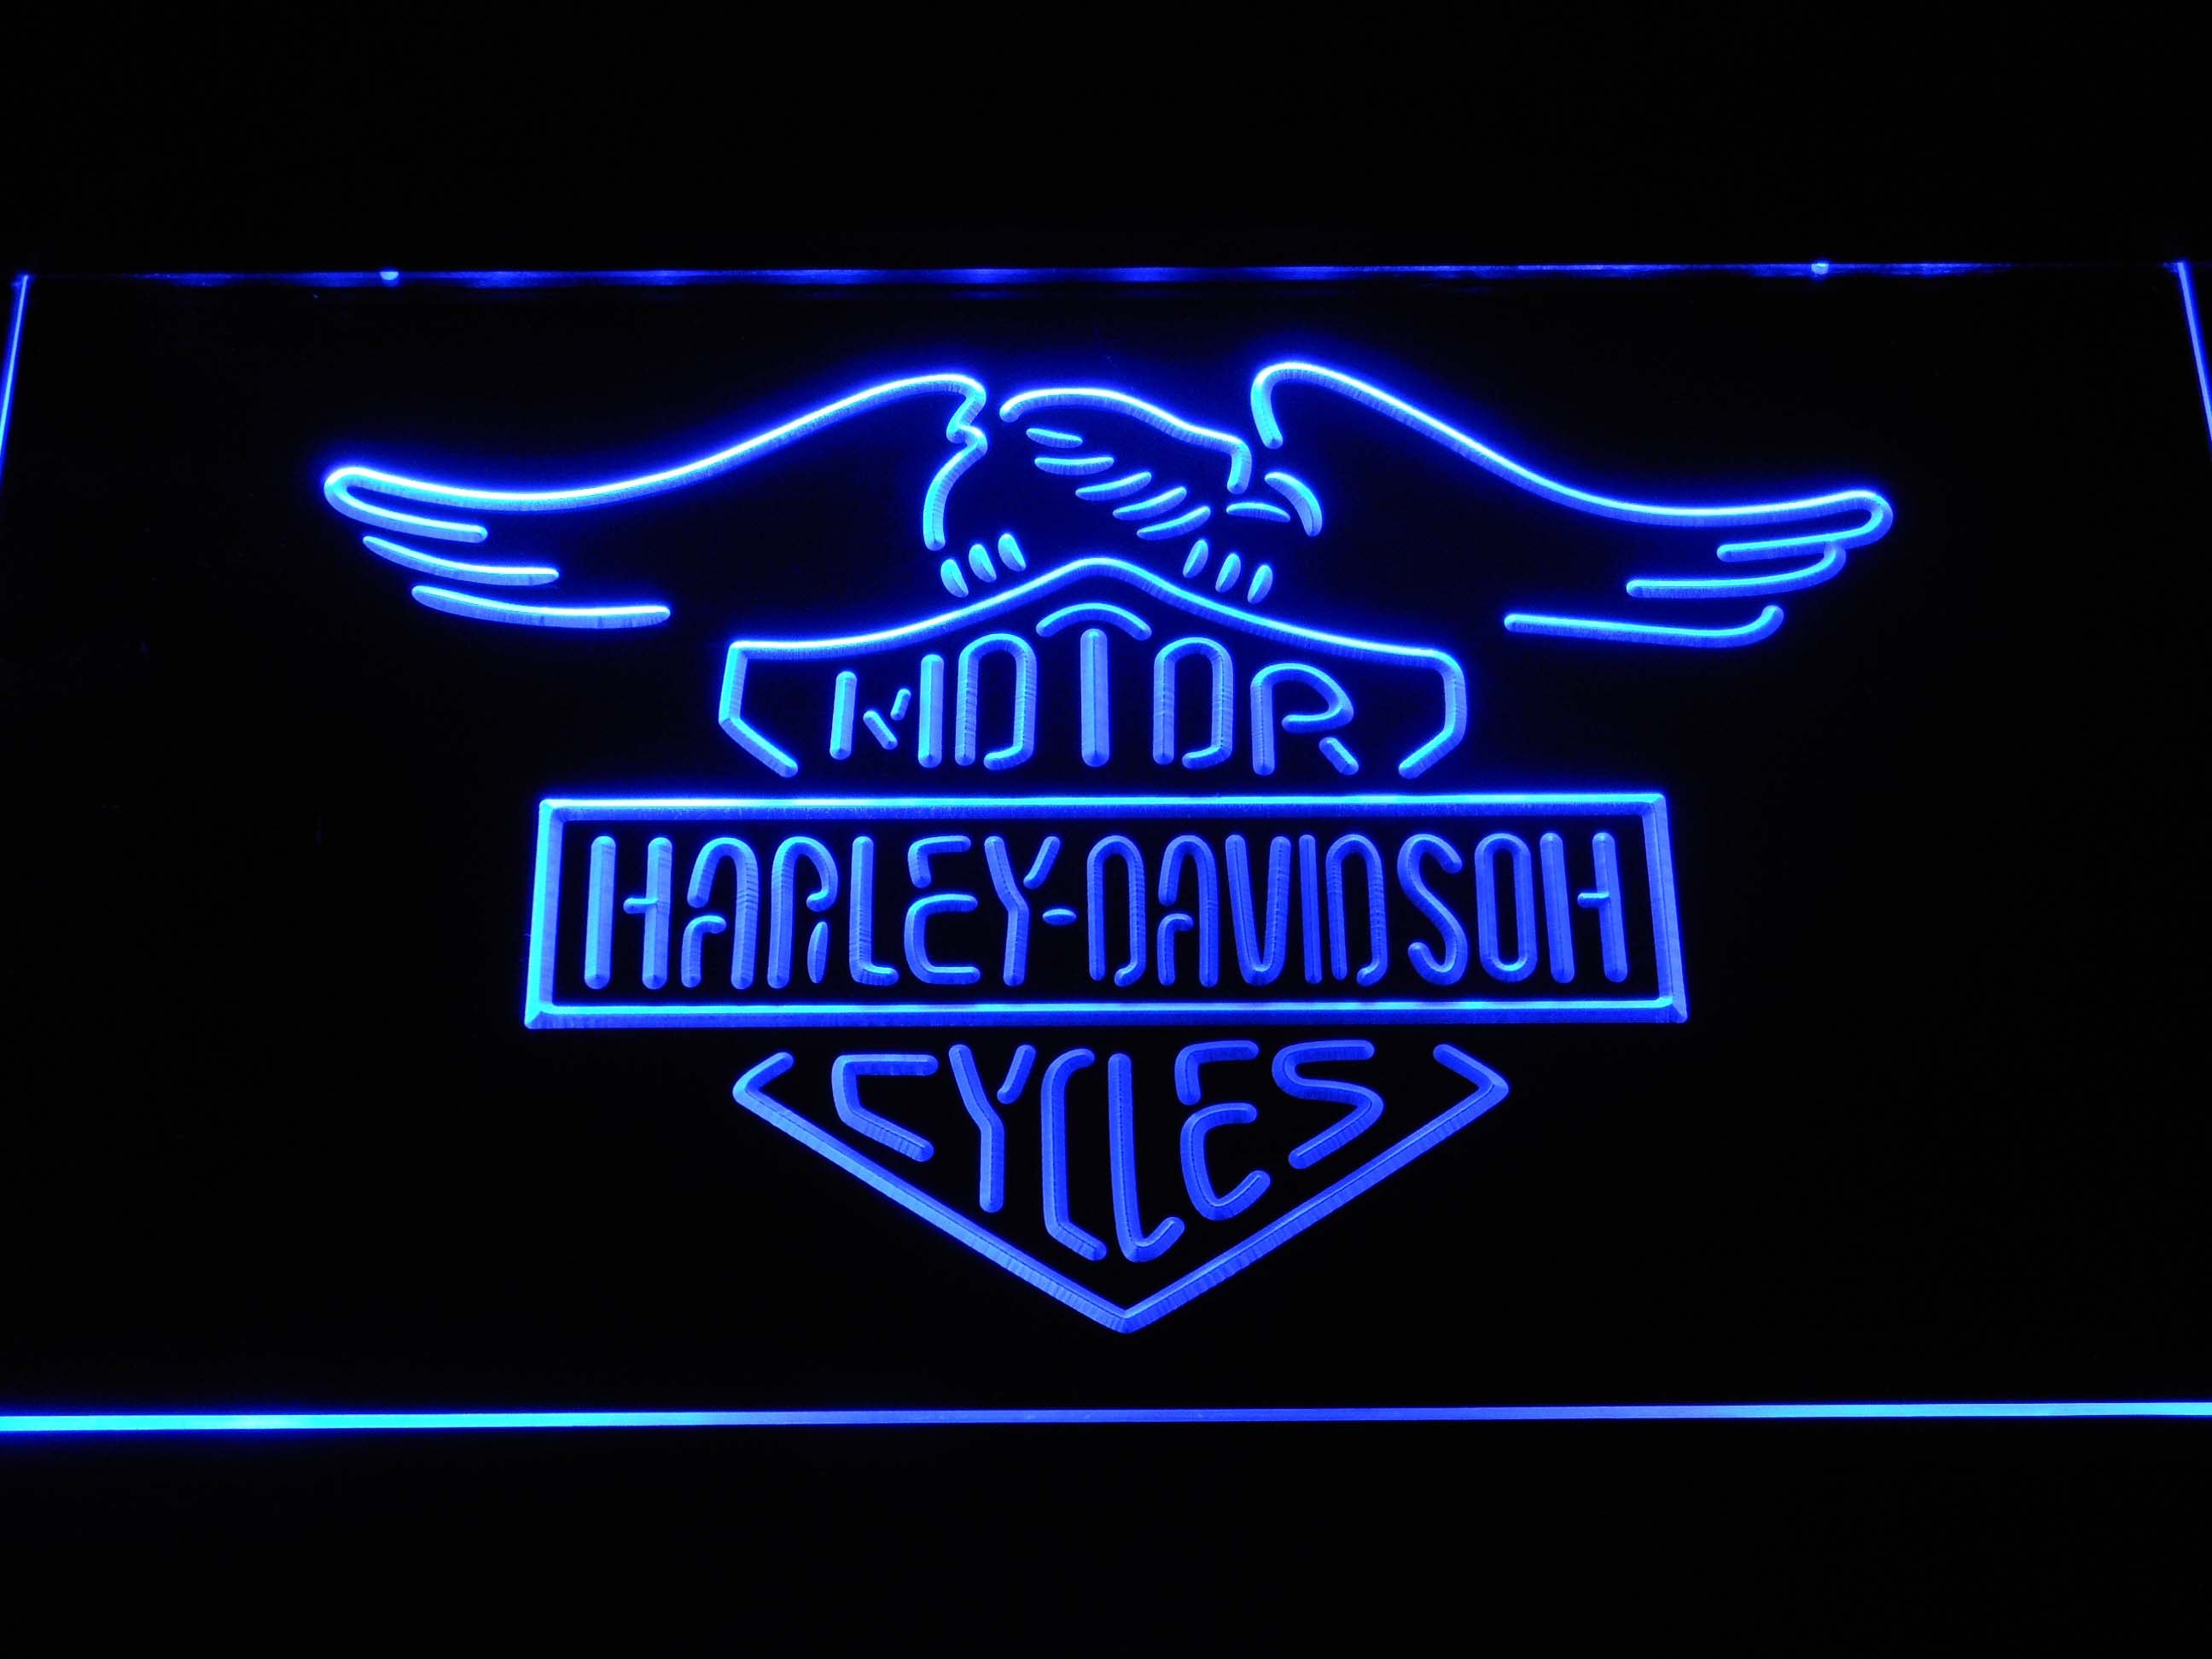 Harley Davidson Eagles MotorCycles 2 Neon Light LED Sign